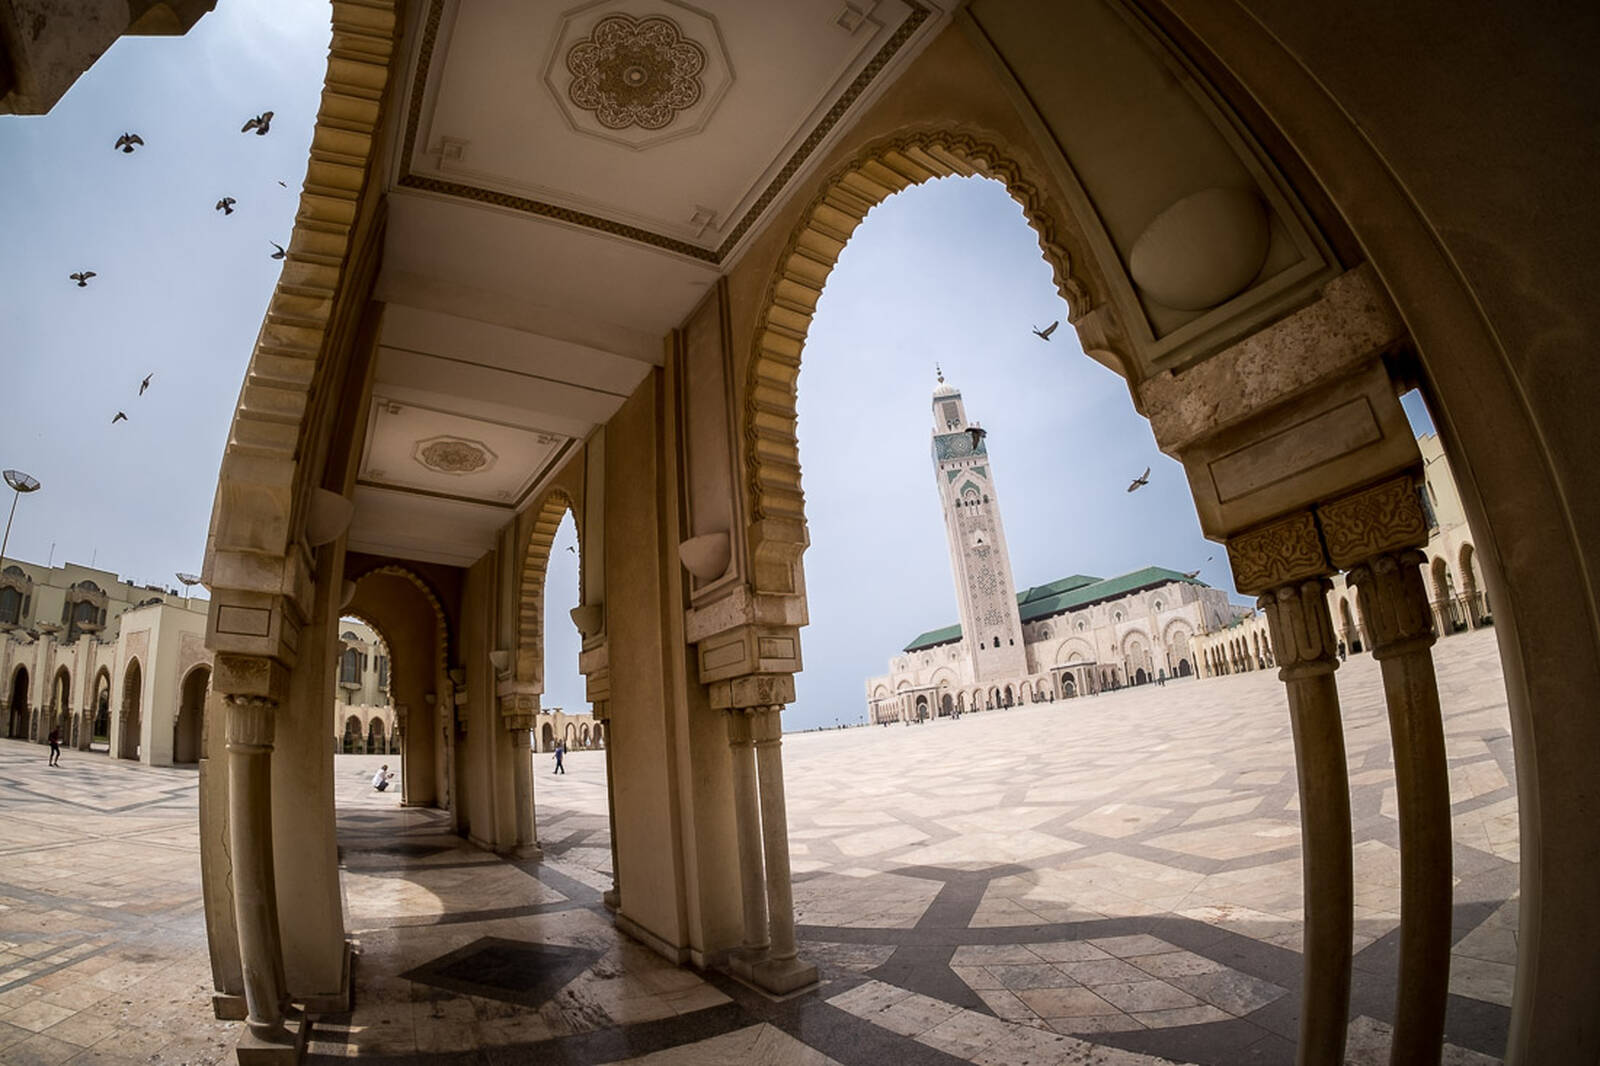 Image of Hassan II Mosque by Darlene Hildebrandt